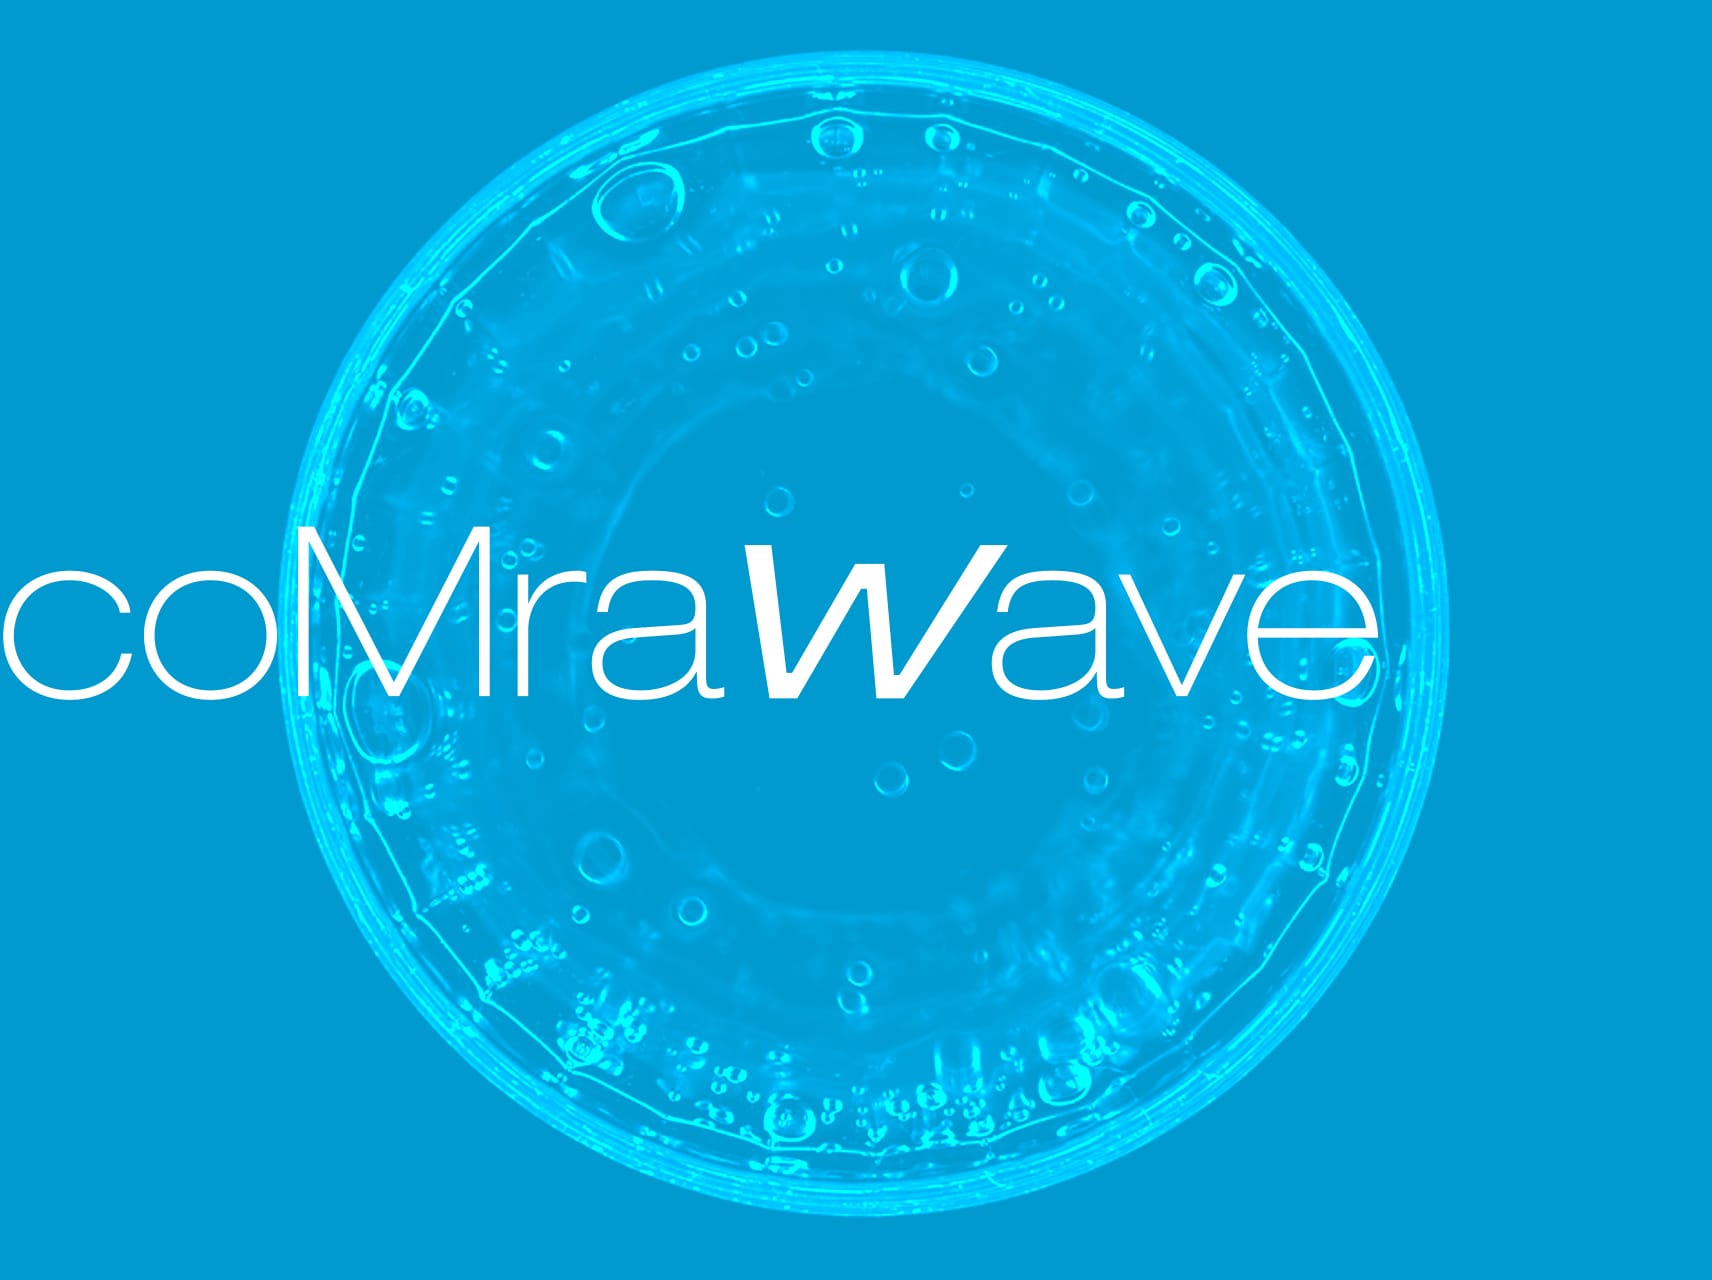 coMra Wave: Concept